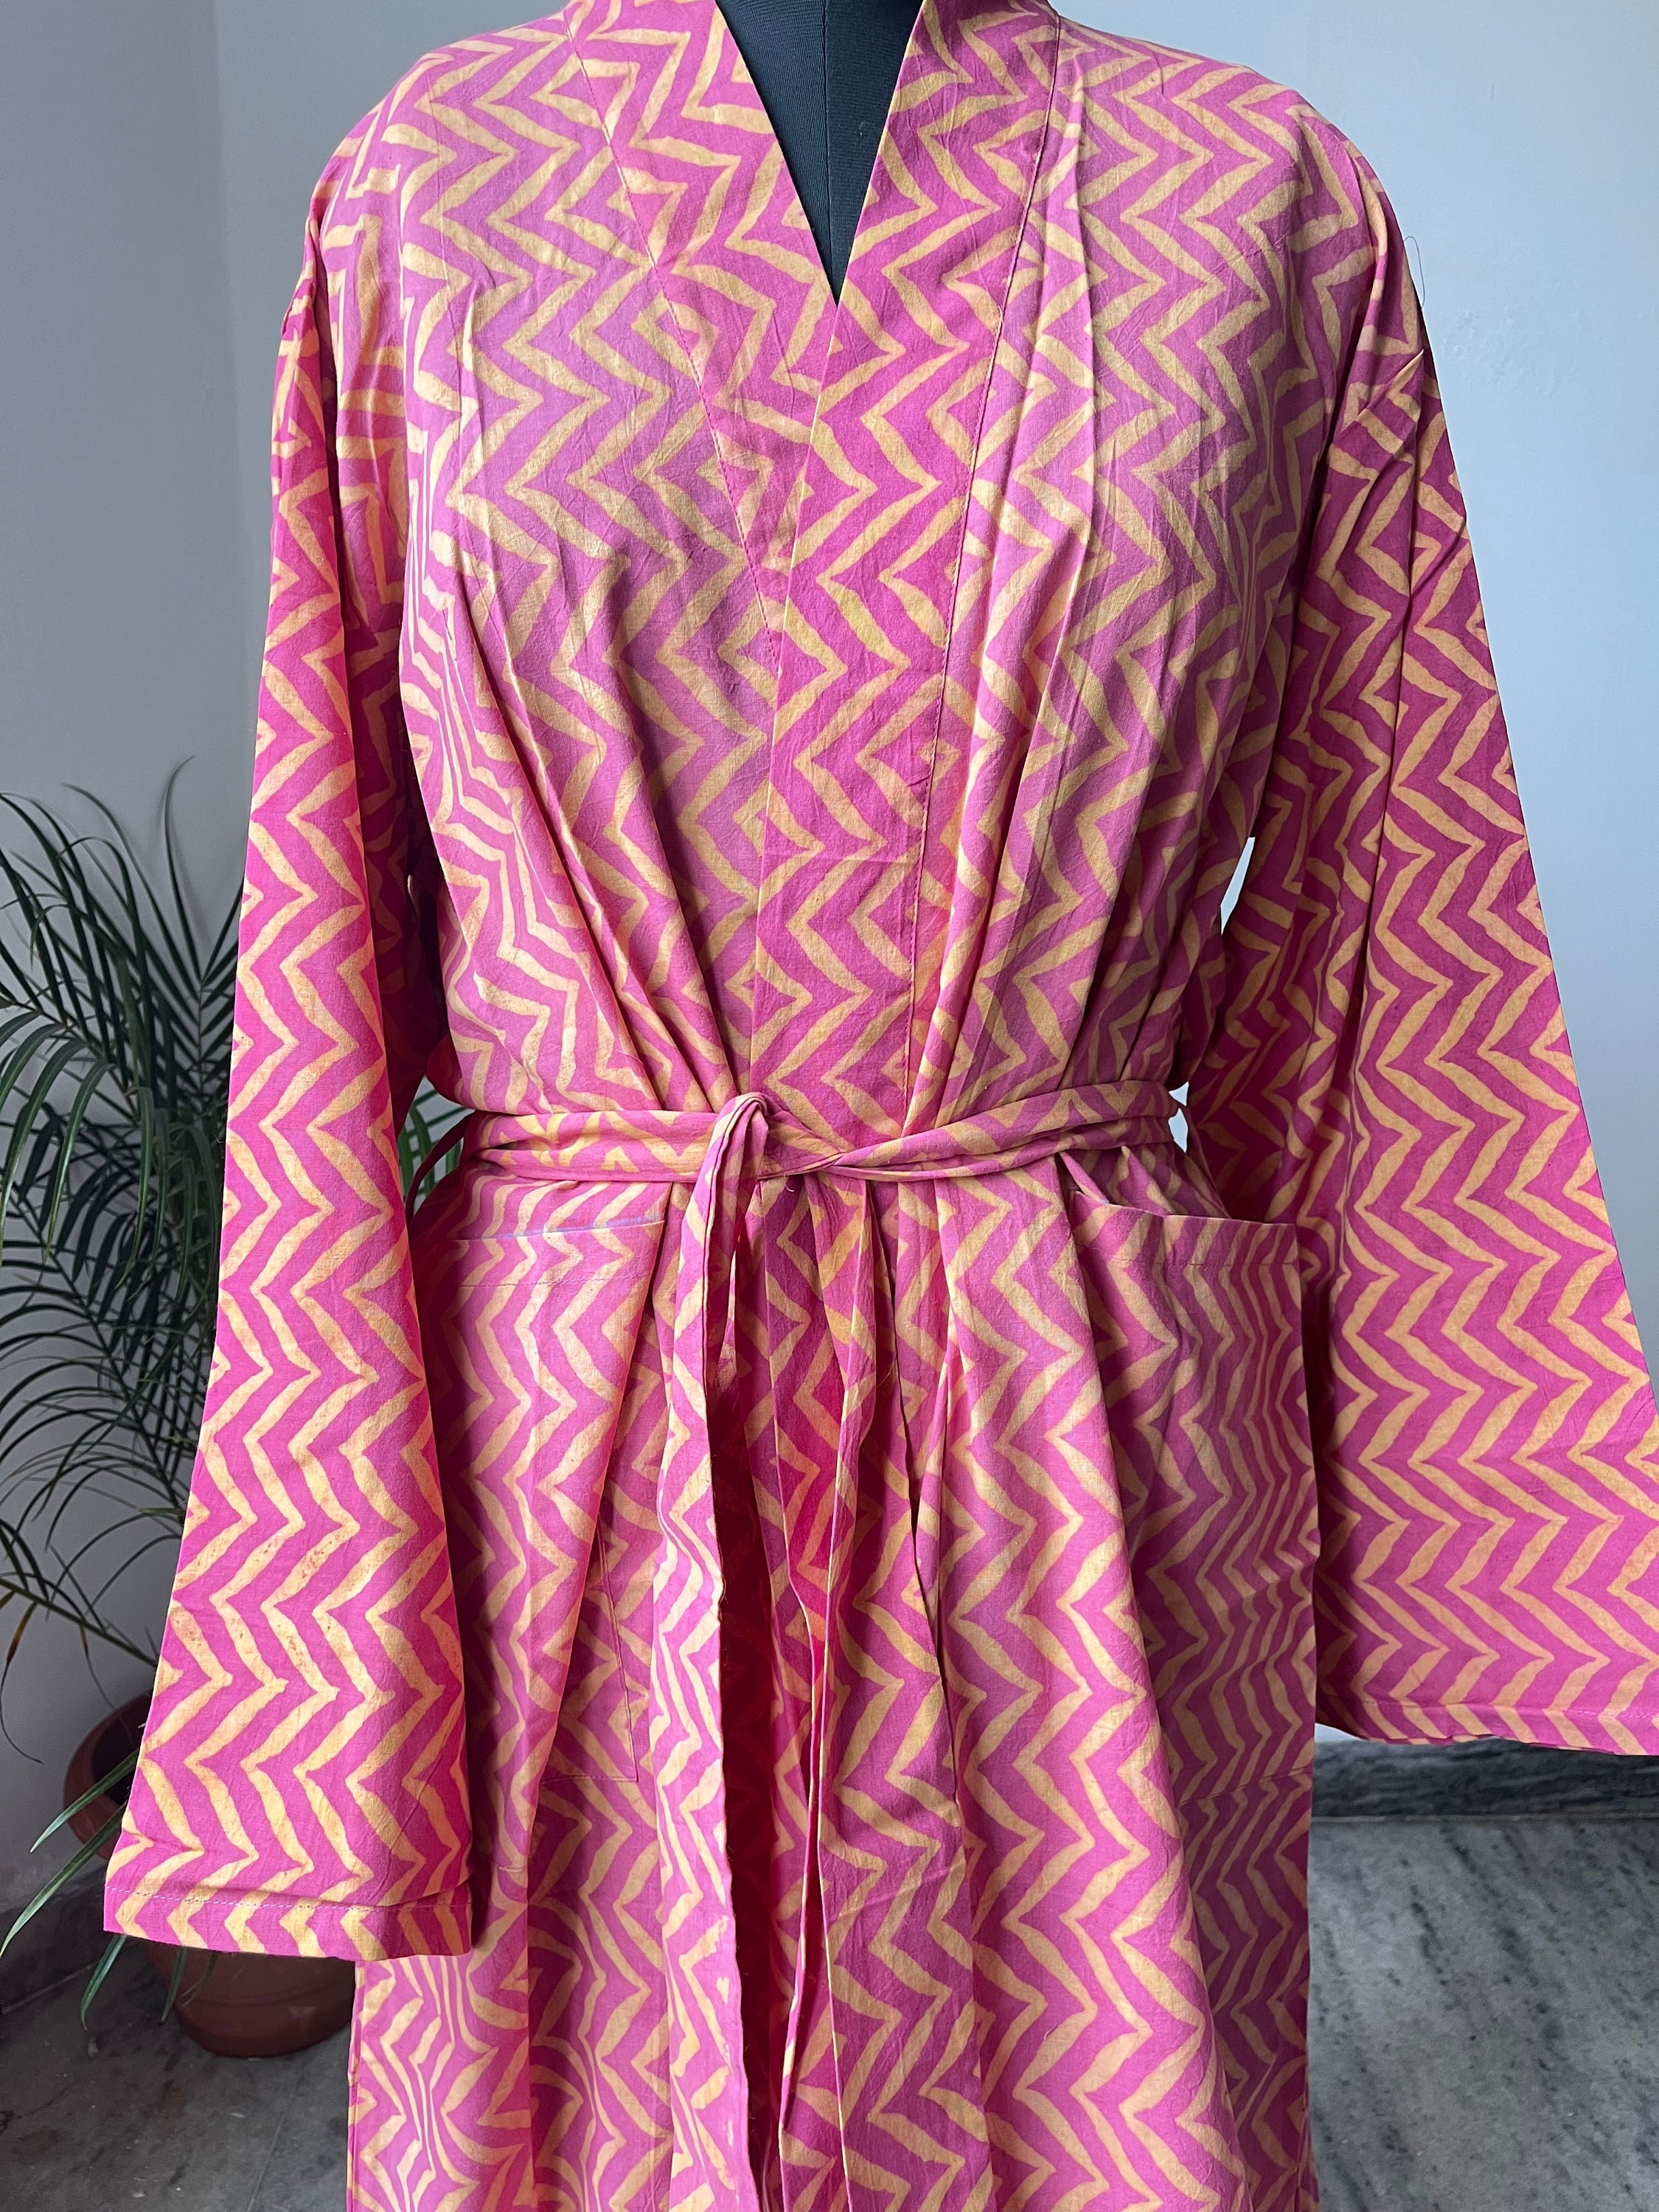 Cotton Robe,bath Robe,kimono Indian Dressing Gown,geom Print,hand Block Bath  Robe ,night Wear Suit, Long Kimono Anokhi Style Pink Color Robe - Etsy